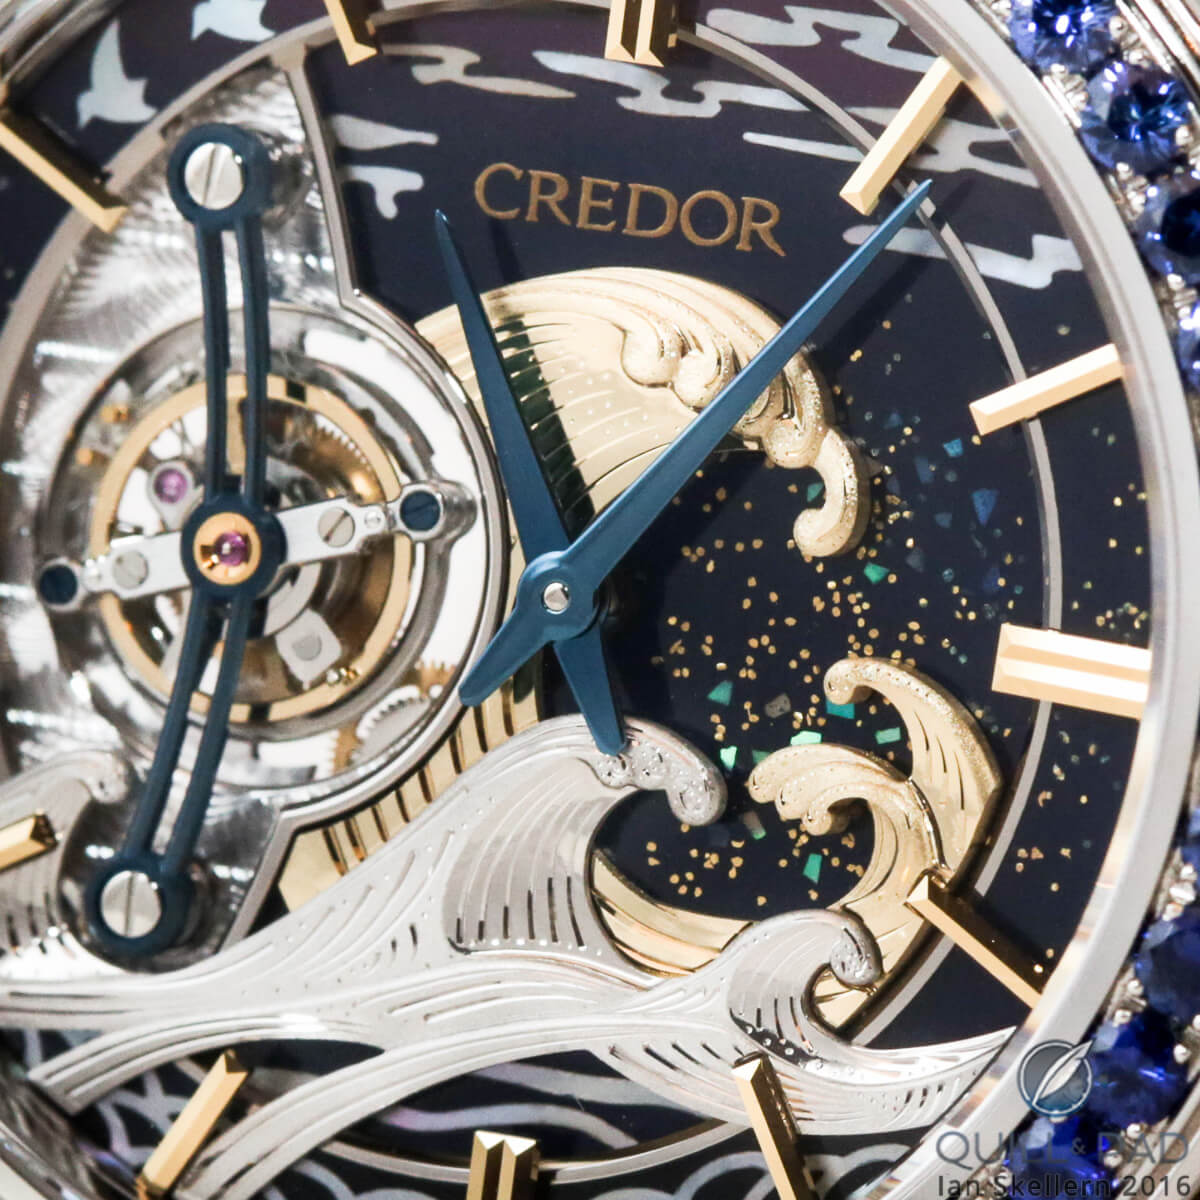 A close look at details on the dial of the Seiko Credor Fugaku Tourbillon